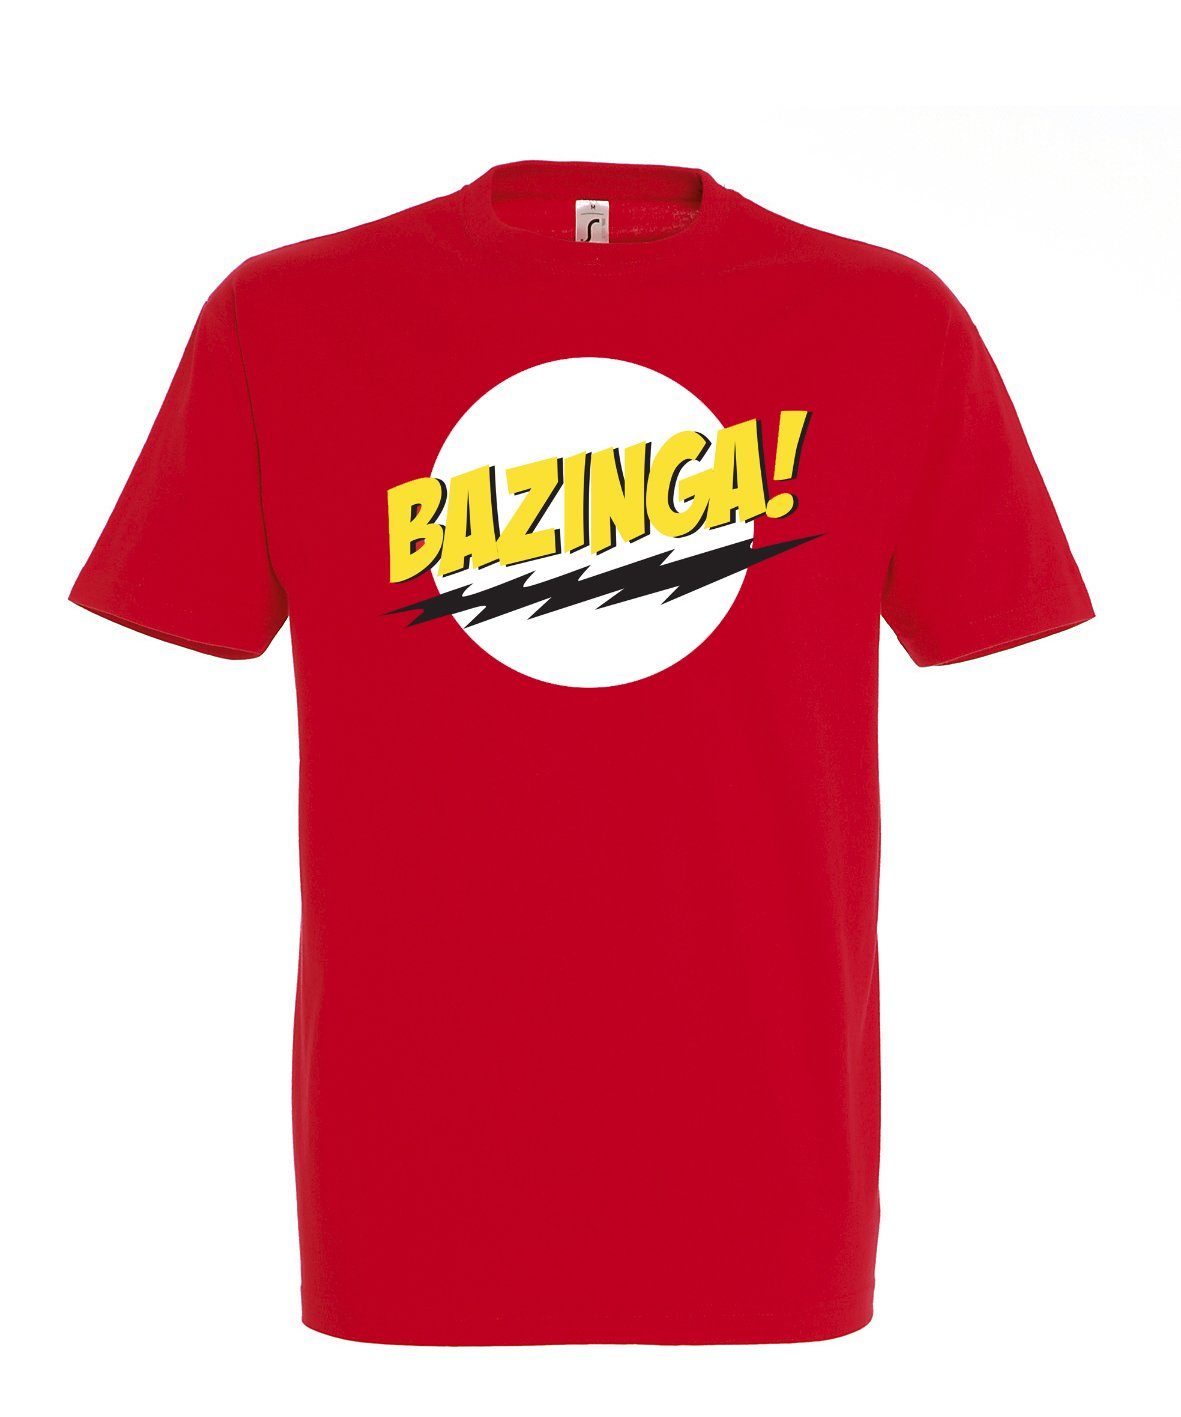 Bazinga Designz Rot Modell T-Shirt Mit T-Shirt Frontprint Herren Youth trendigem